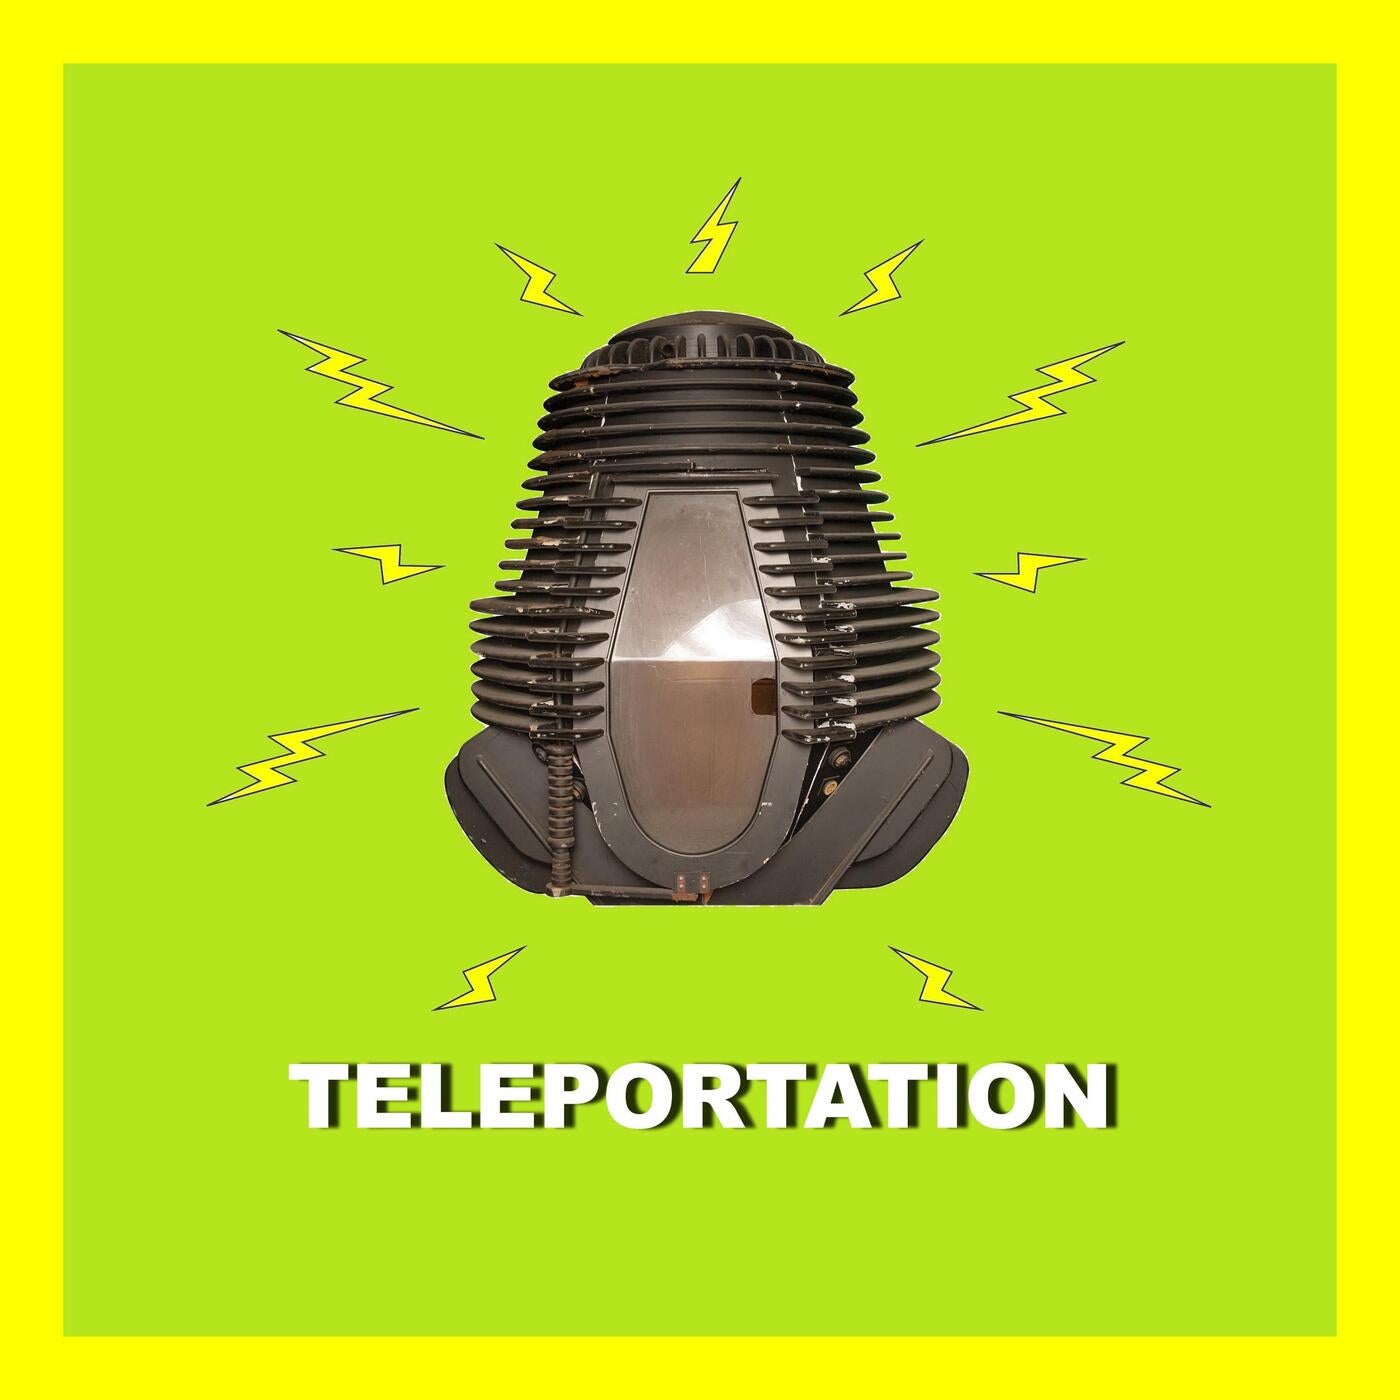 Teleportation